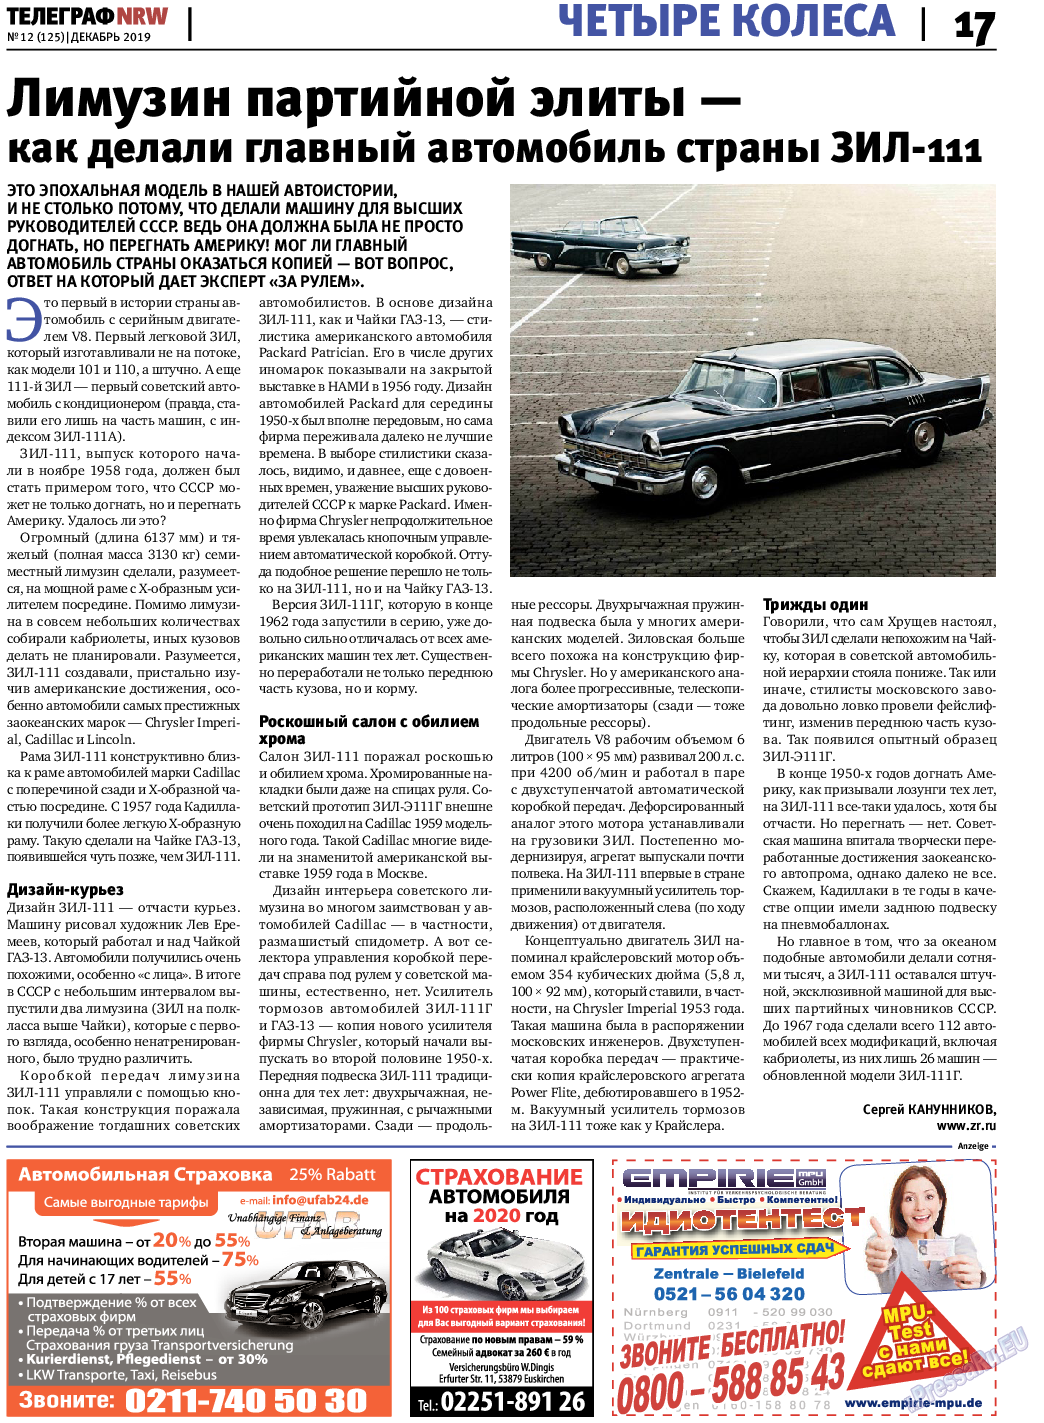 Телеграф NRW, газета. 2019 №12 стр.17